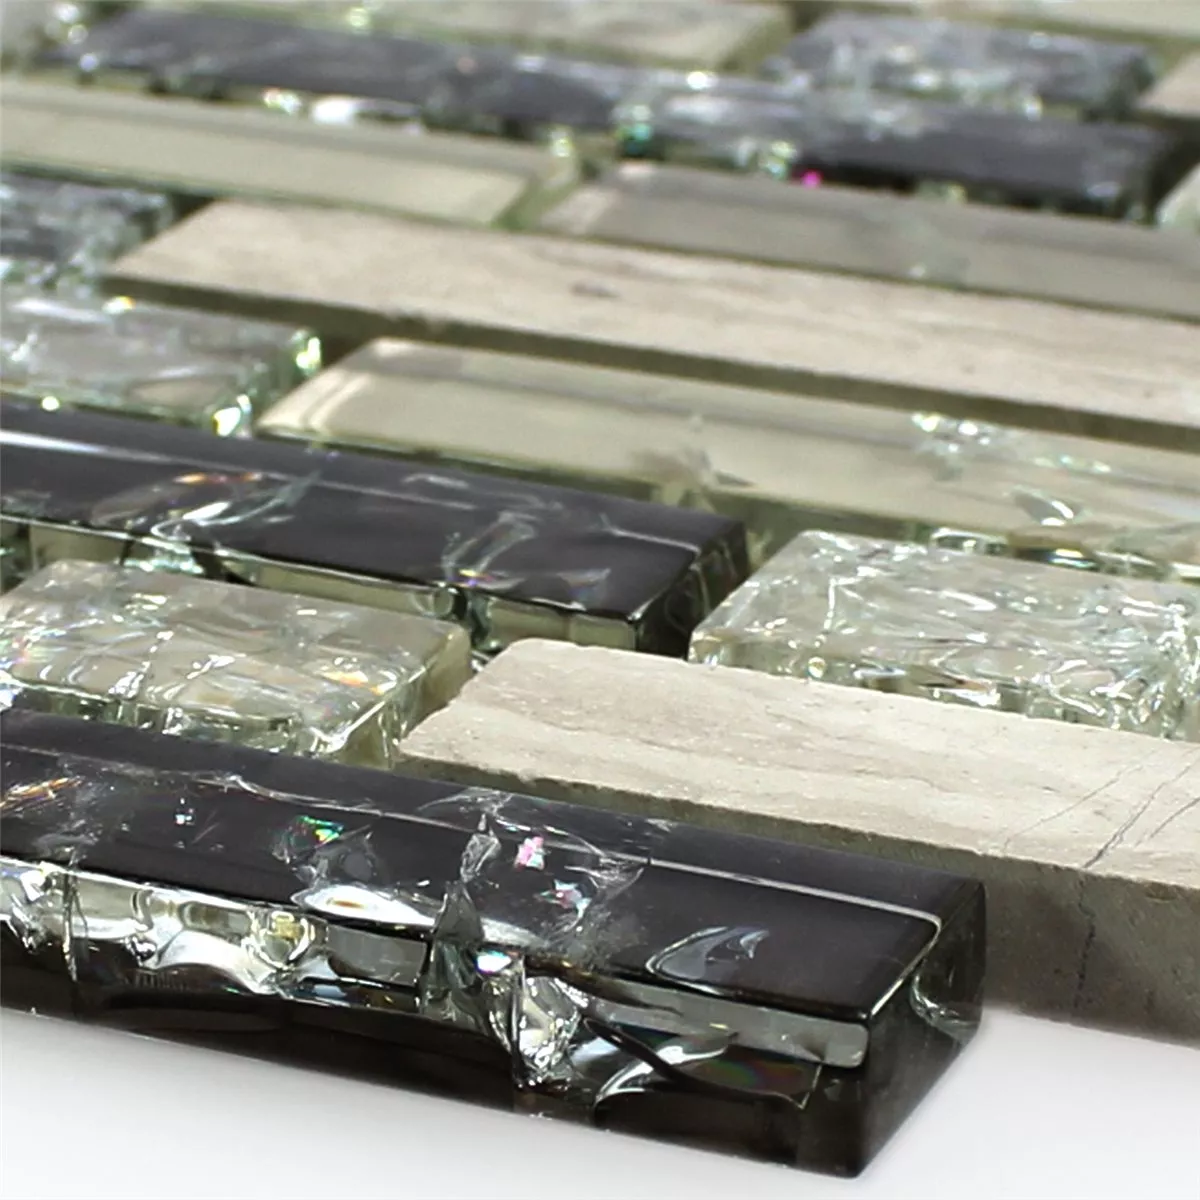 Mosaic Tiles Glass Natural Stone SmoothBroken Green Grey